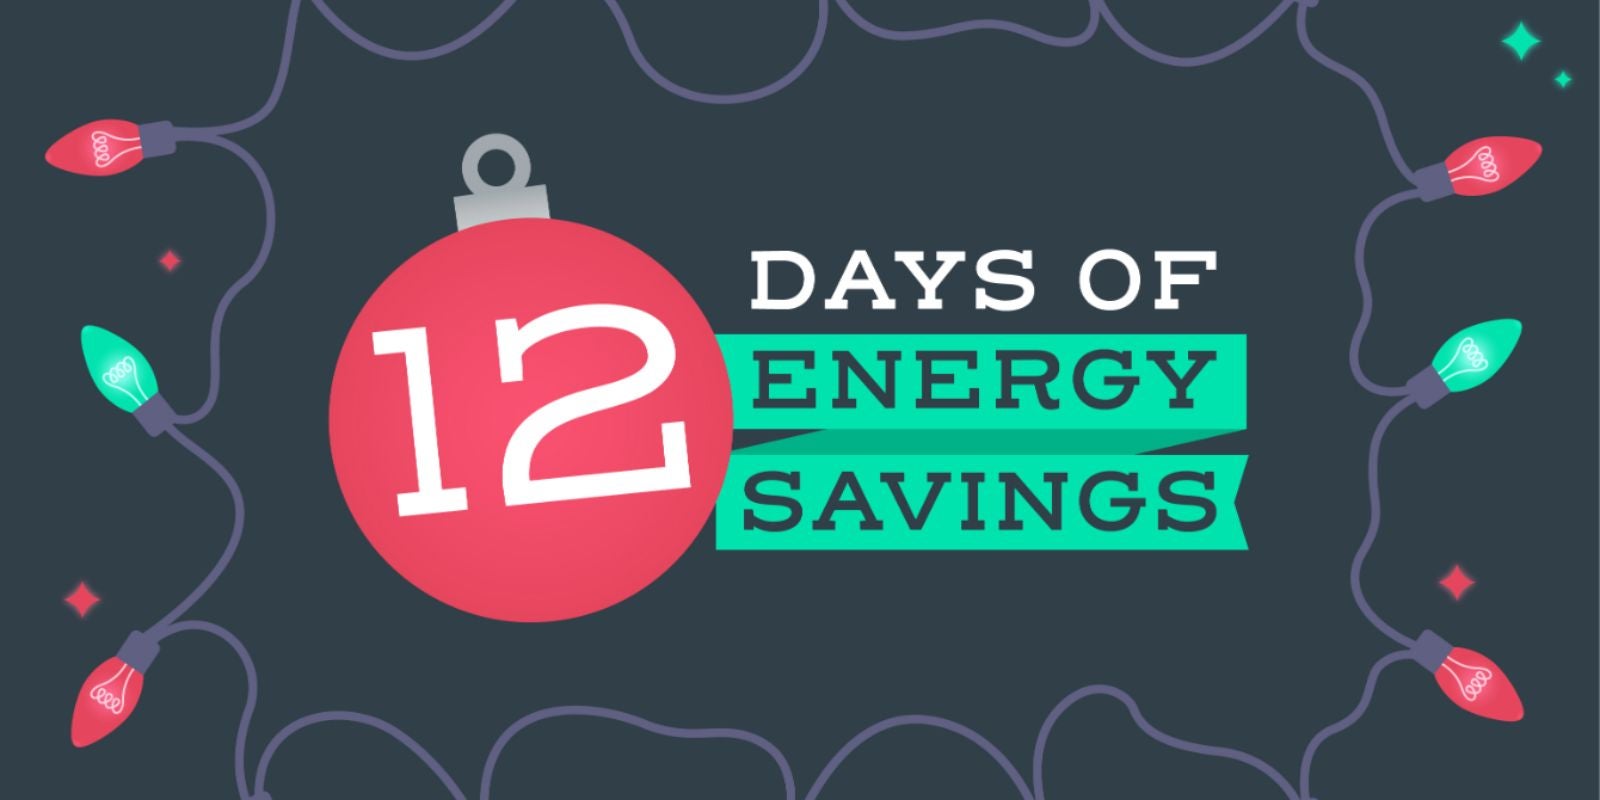 12 Days of Energy Savings Tips